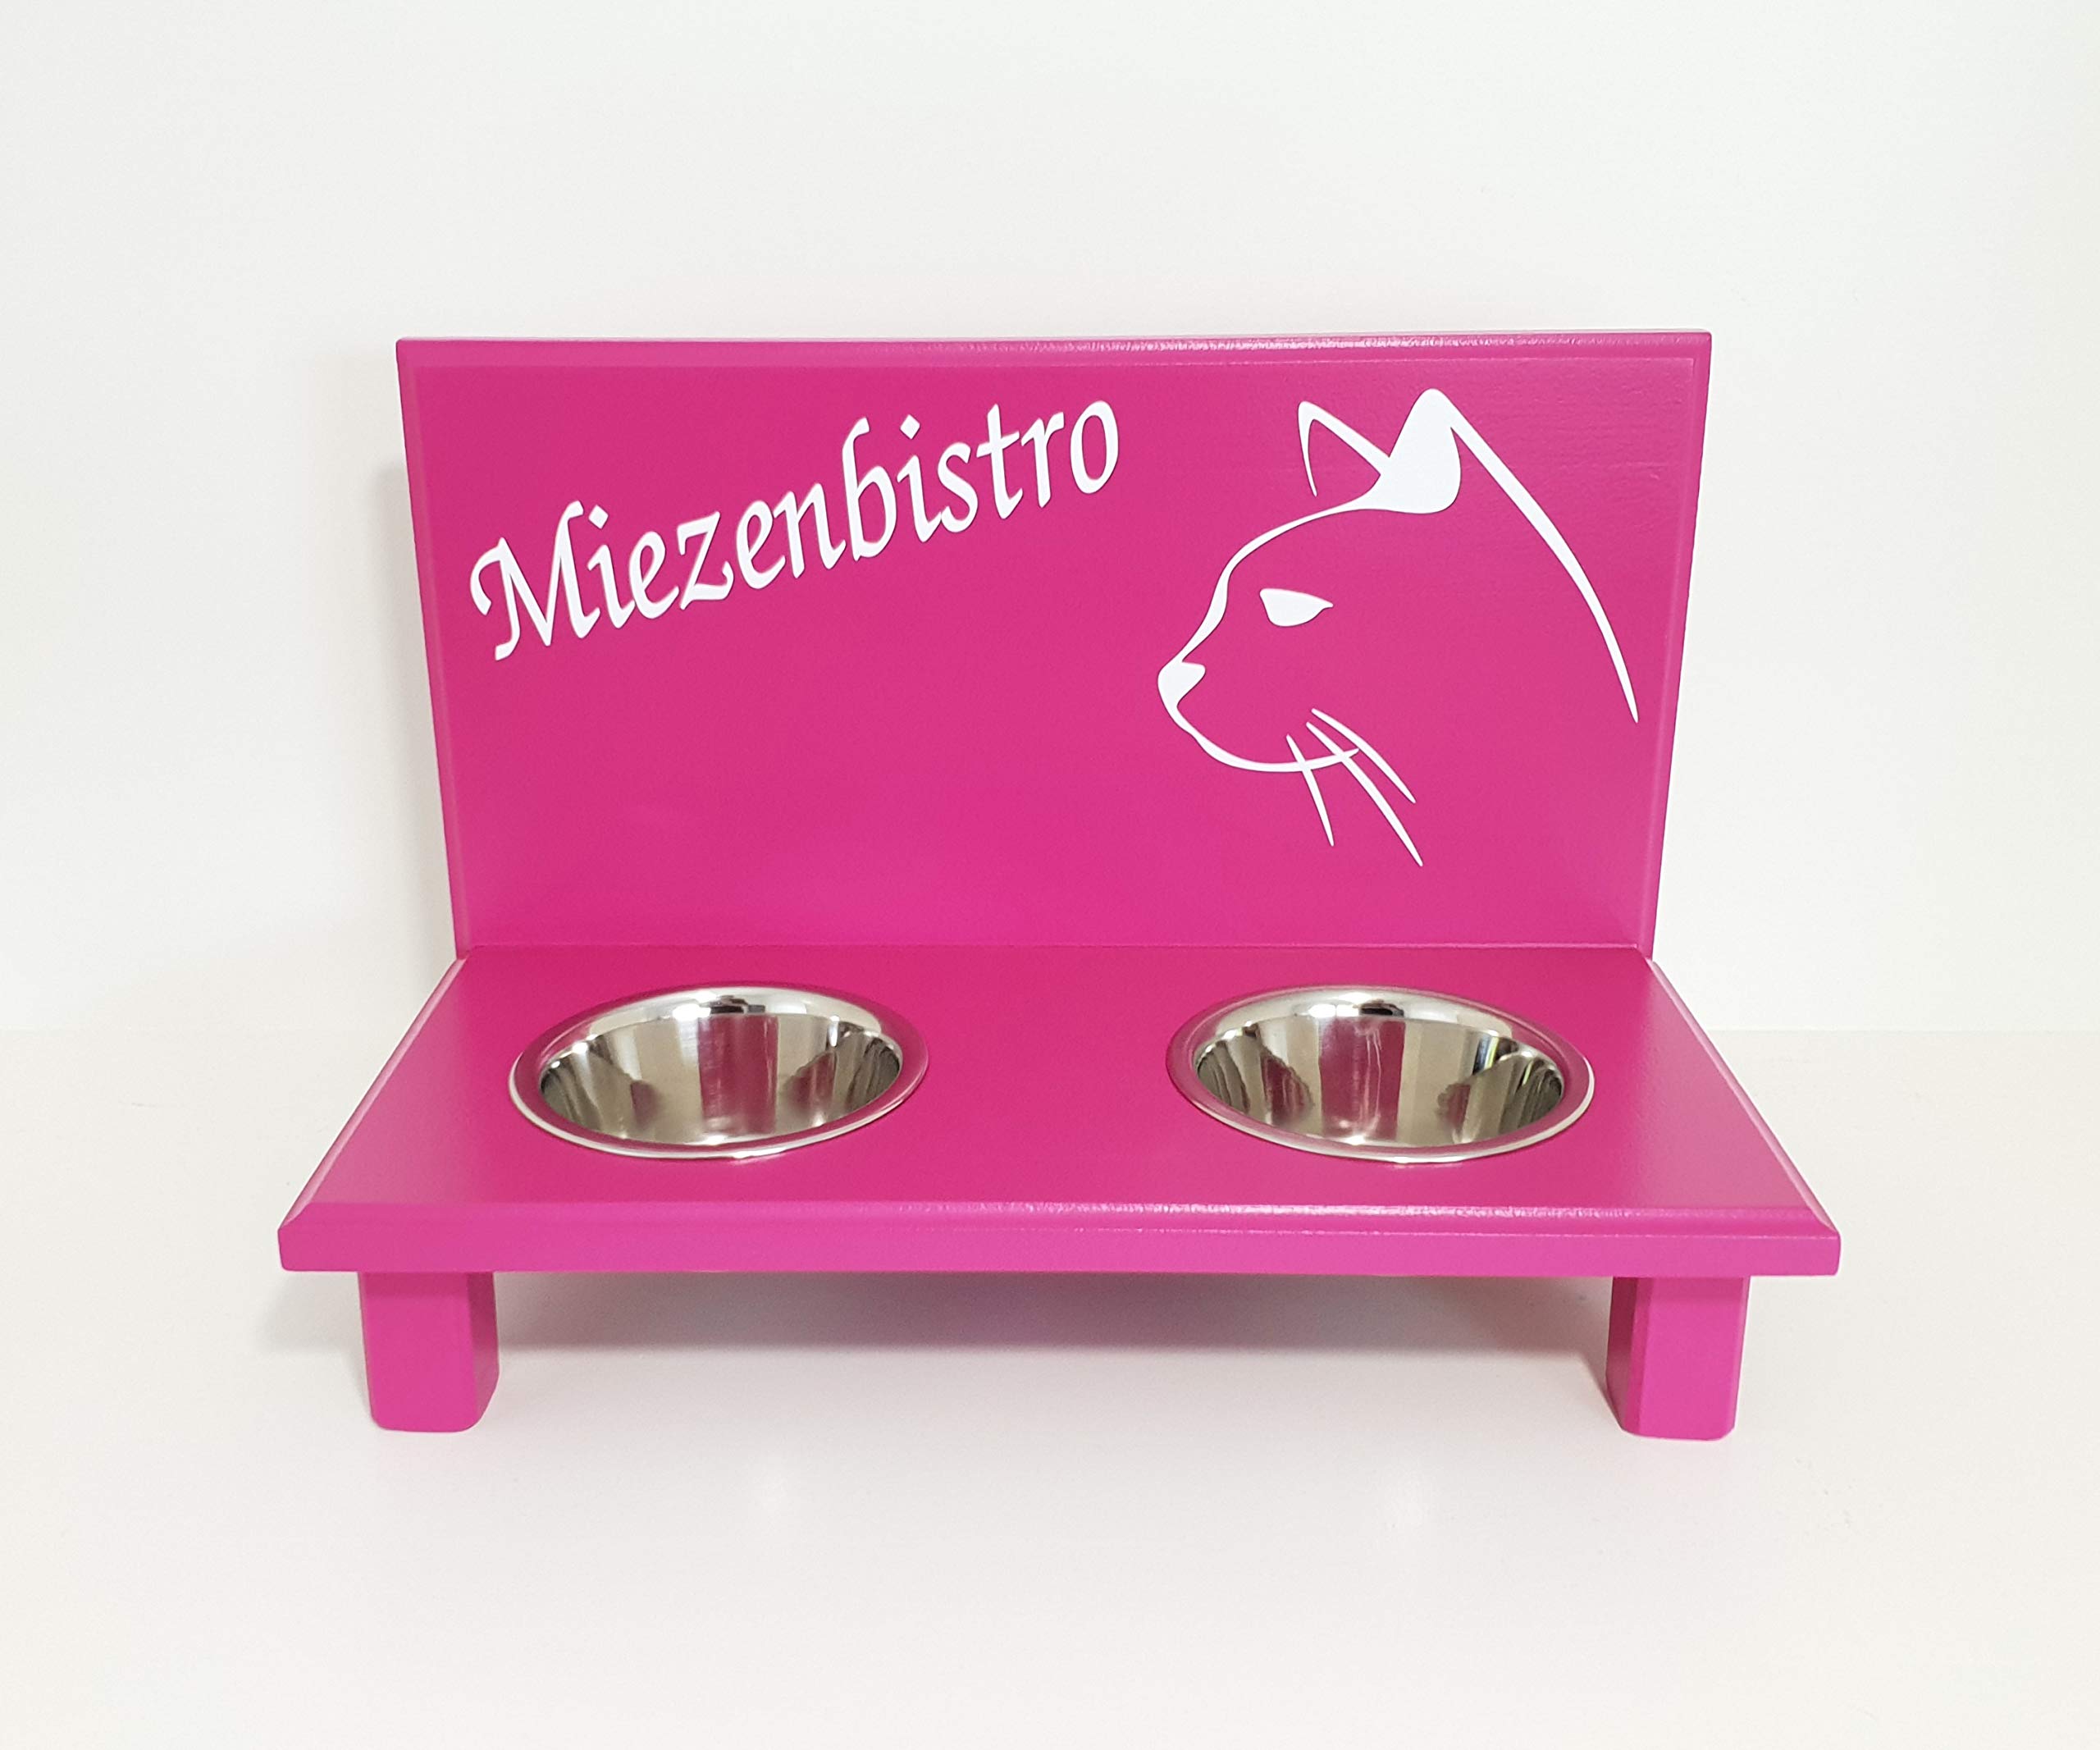 Jennys Tiershop Futterbar. Katzen Napf. Napfhalter für Katzen. Futterbar Katze in pink. 2 x 350 ml Edelstahlnapf (32e)